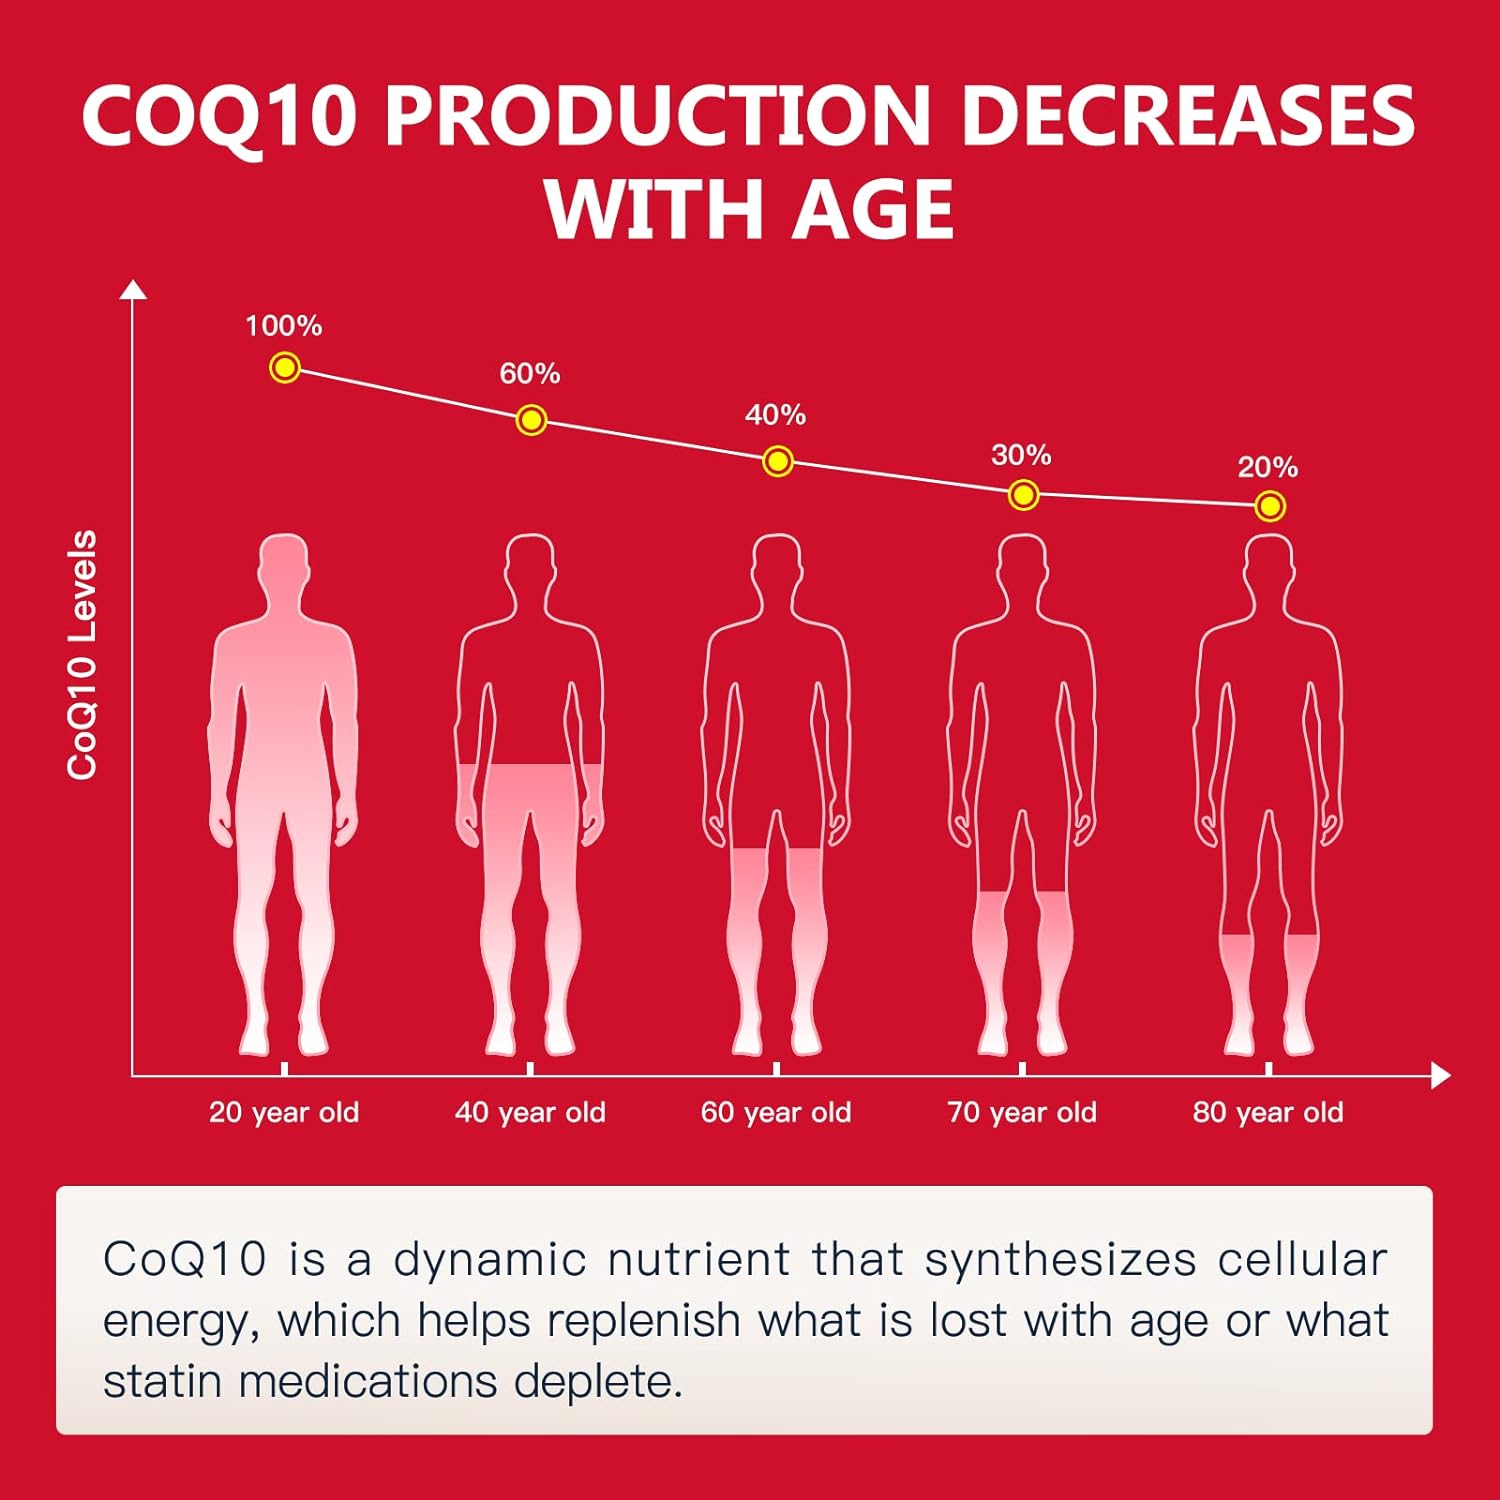 CoQ10 is a dynamic nutrient